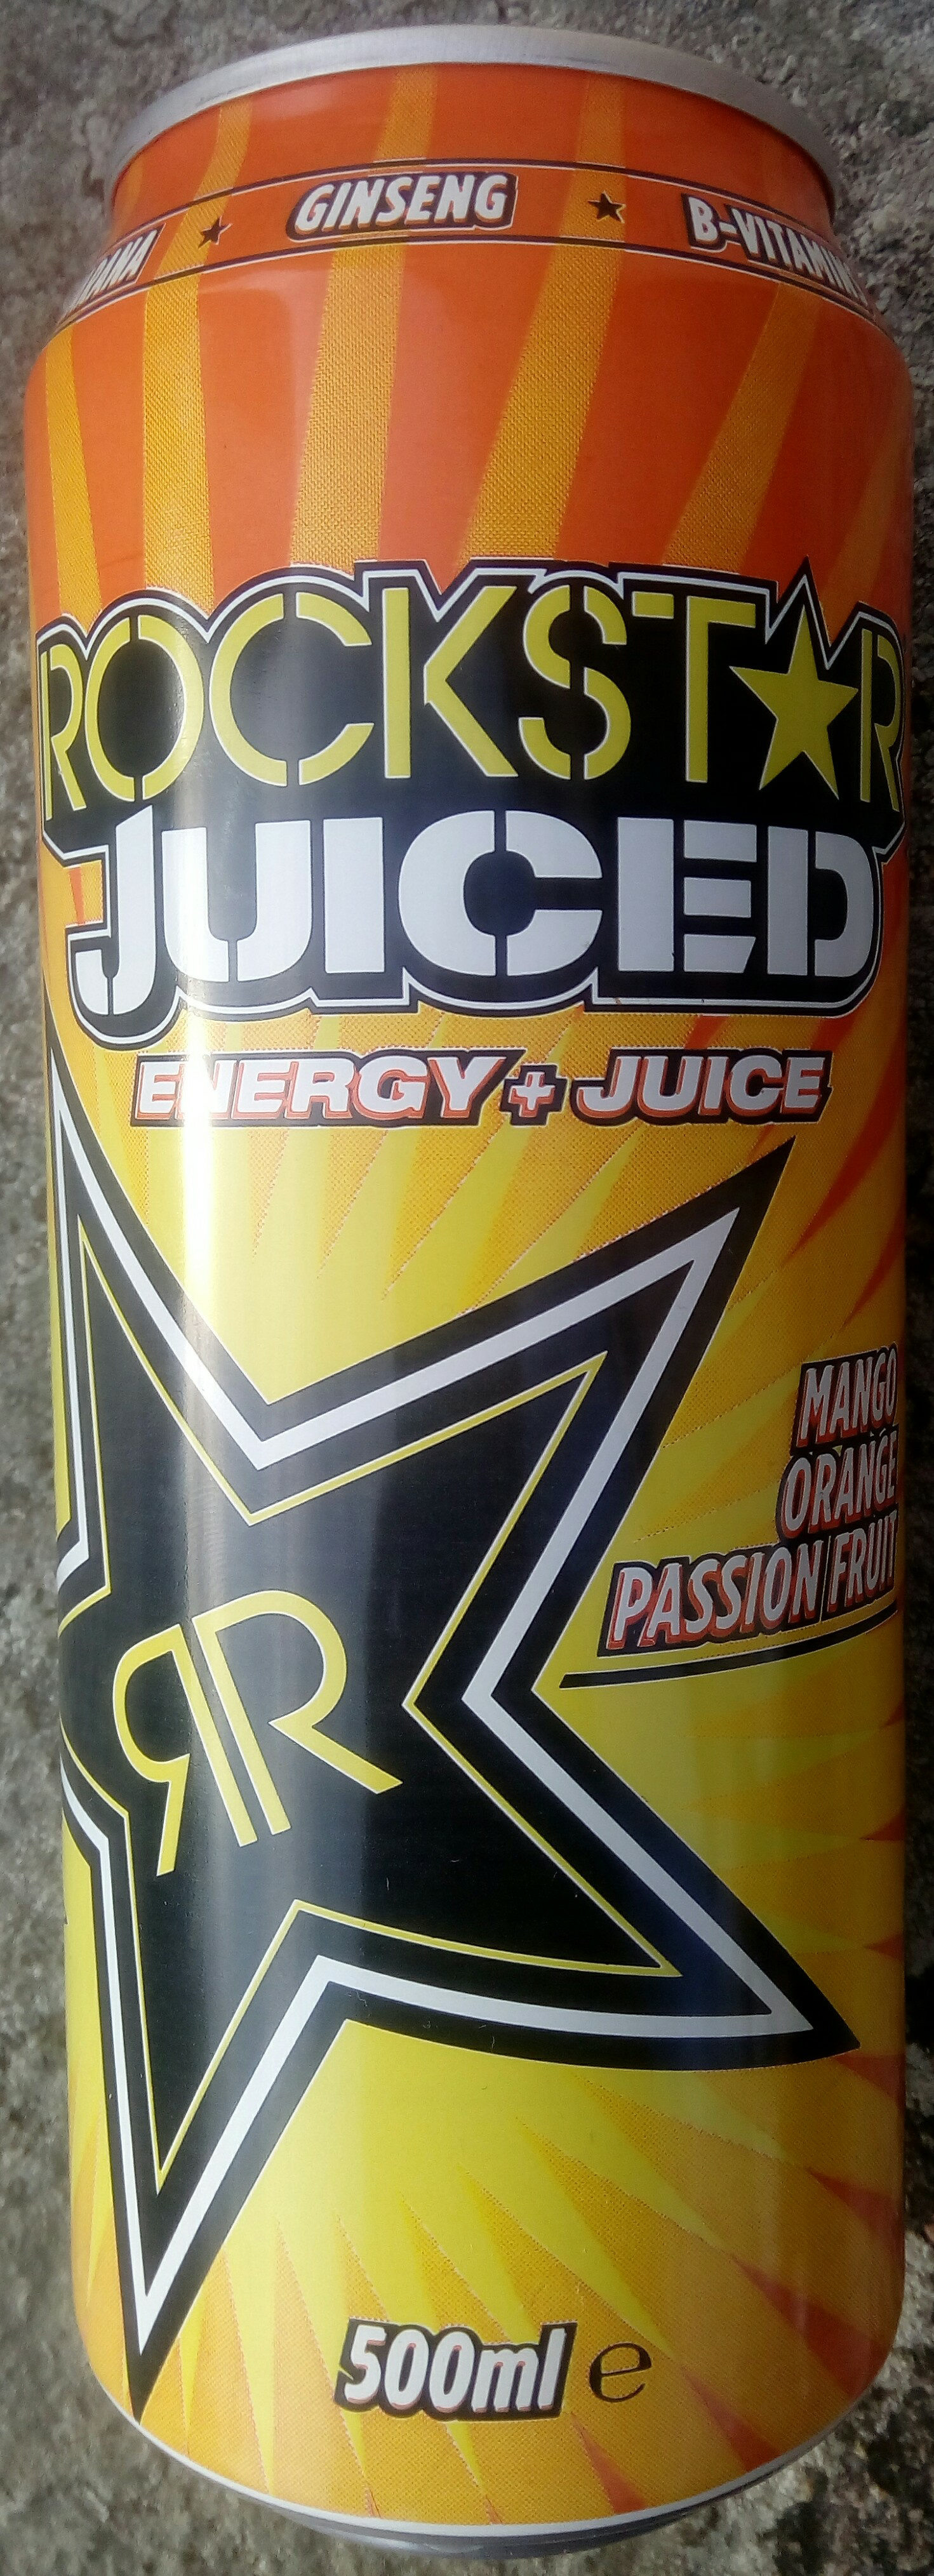 Rockstar Juiced Energy + Juice Mango, Orange, Passion Fruit - Produkt